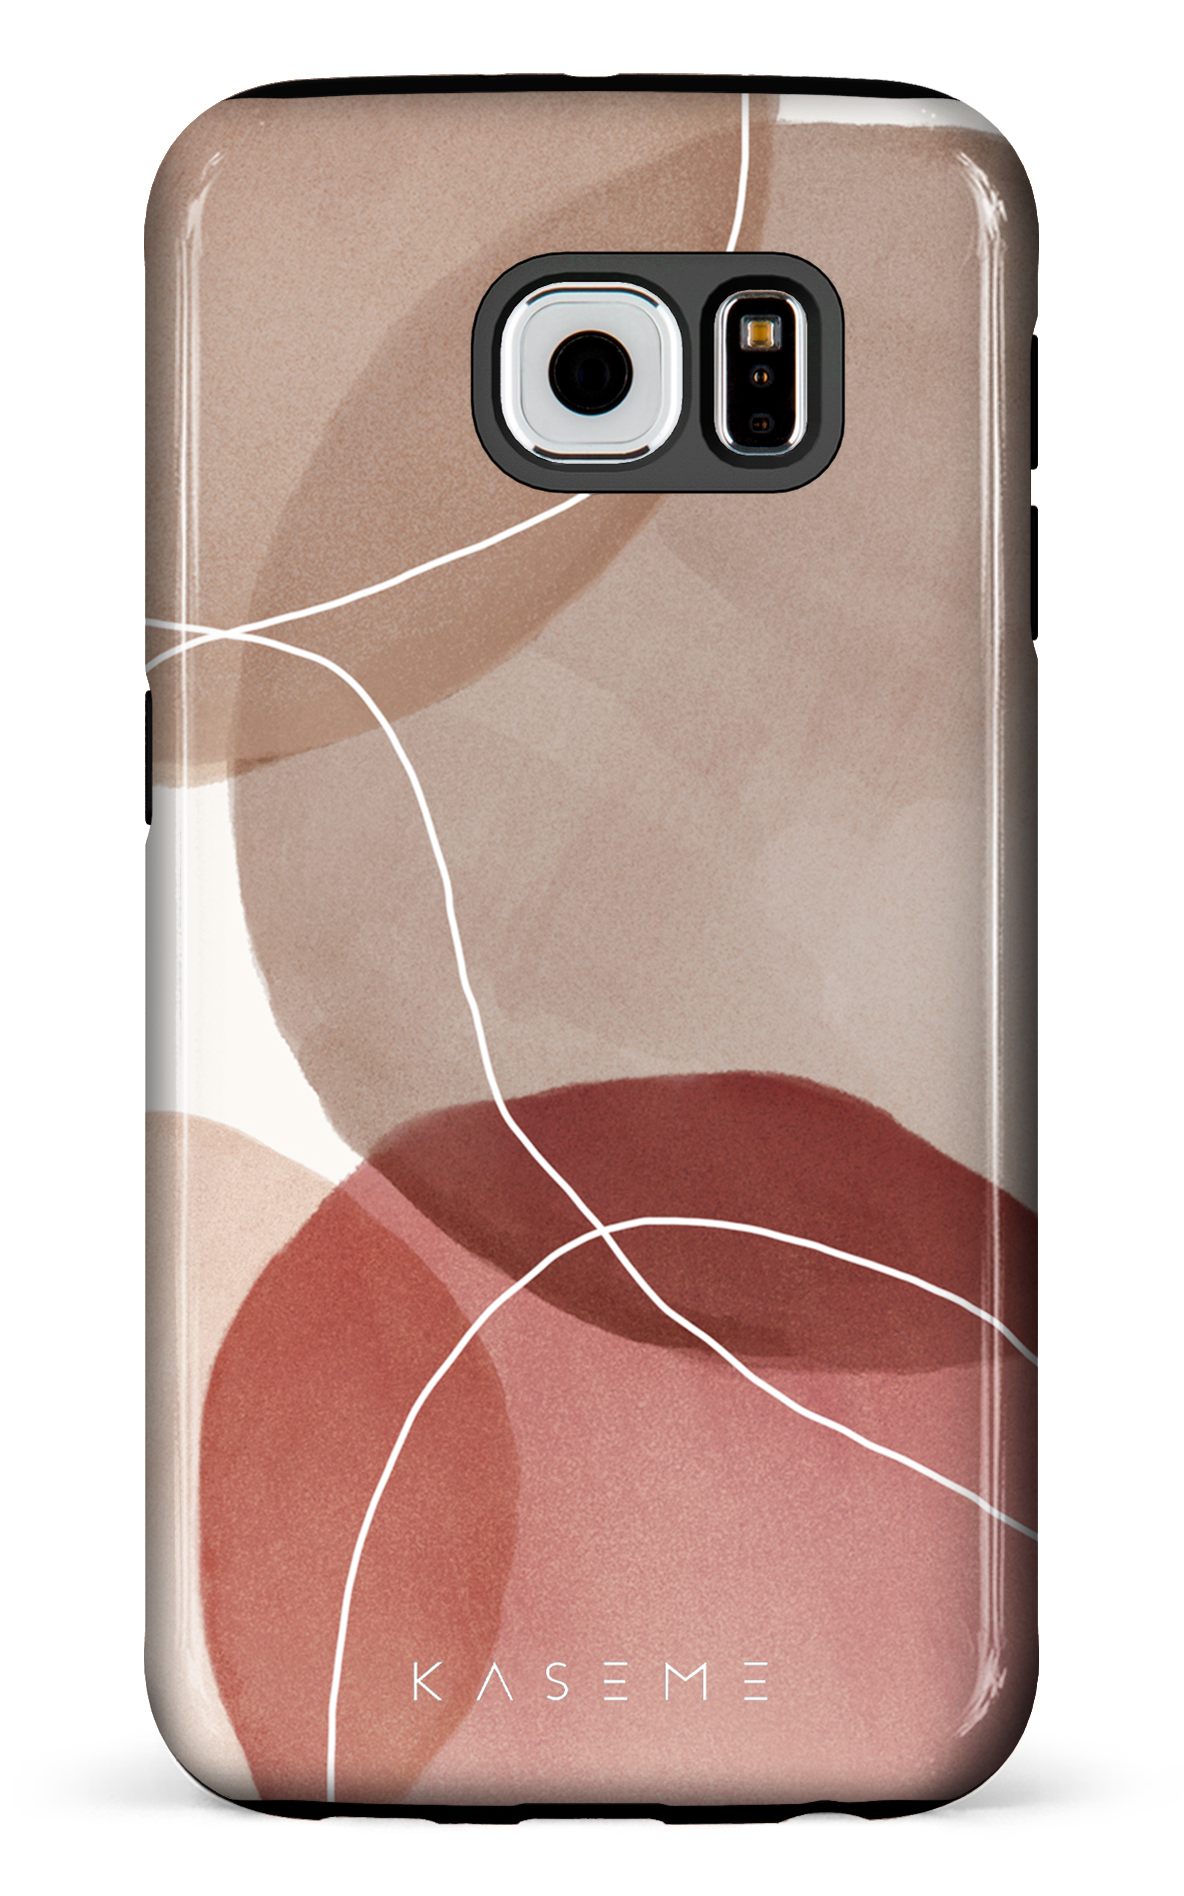 Grace - Galaxy S6